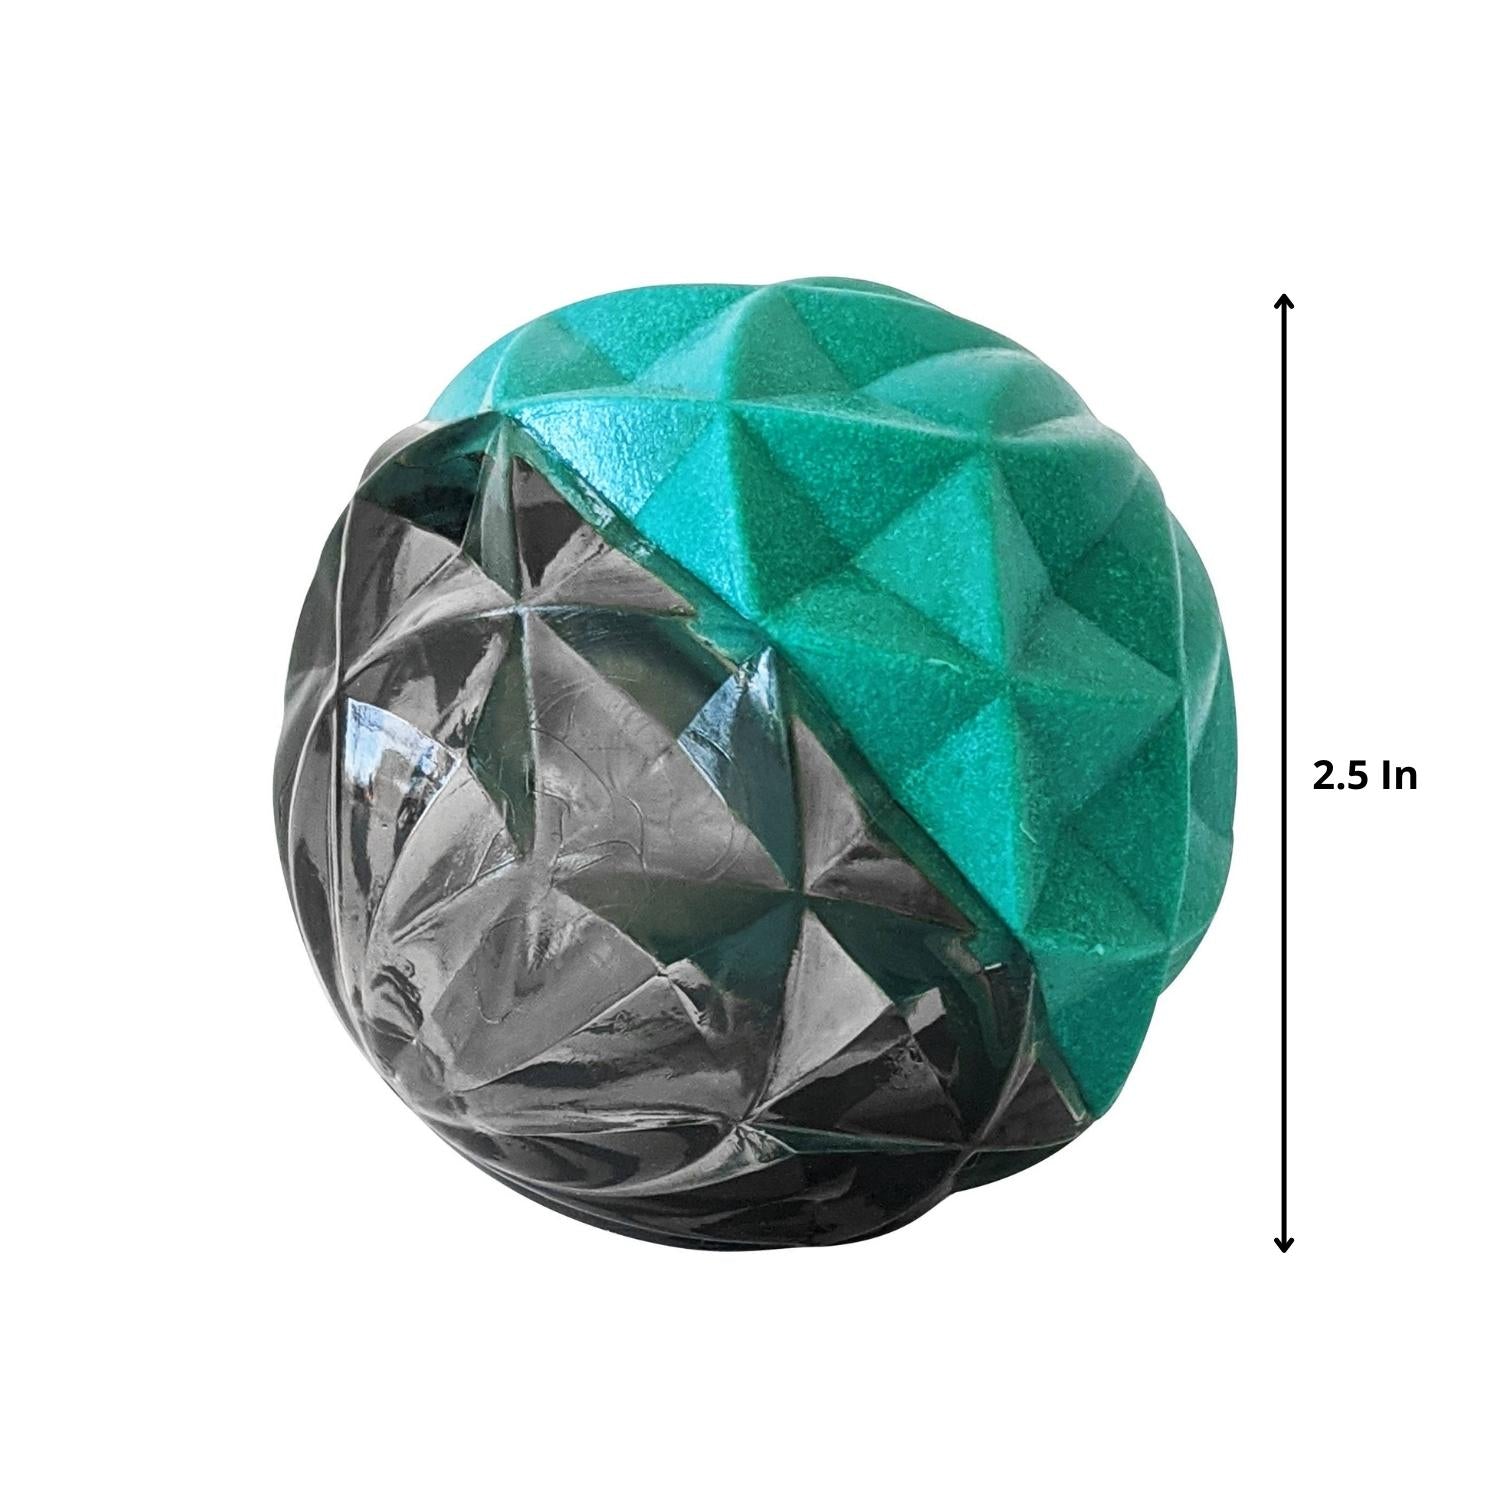 Geometric Design Textured Ball Dog Chew Toy - Small-2